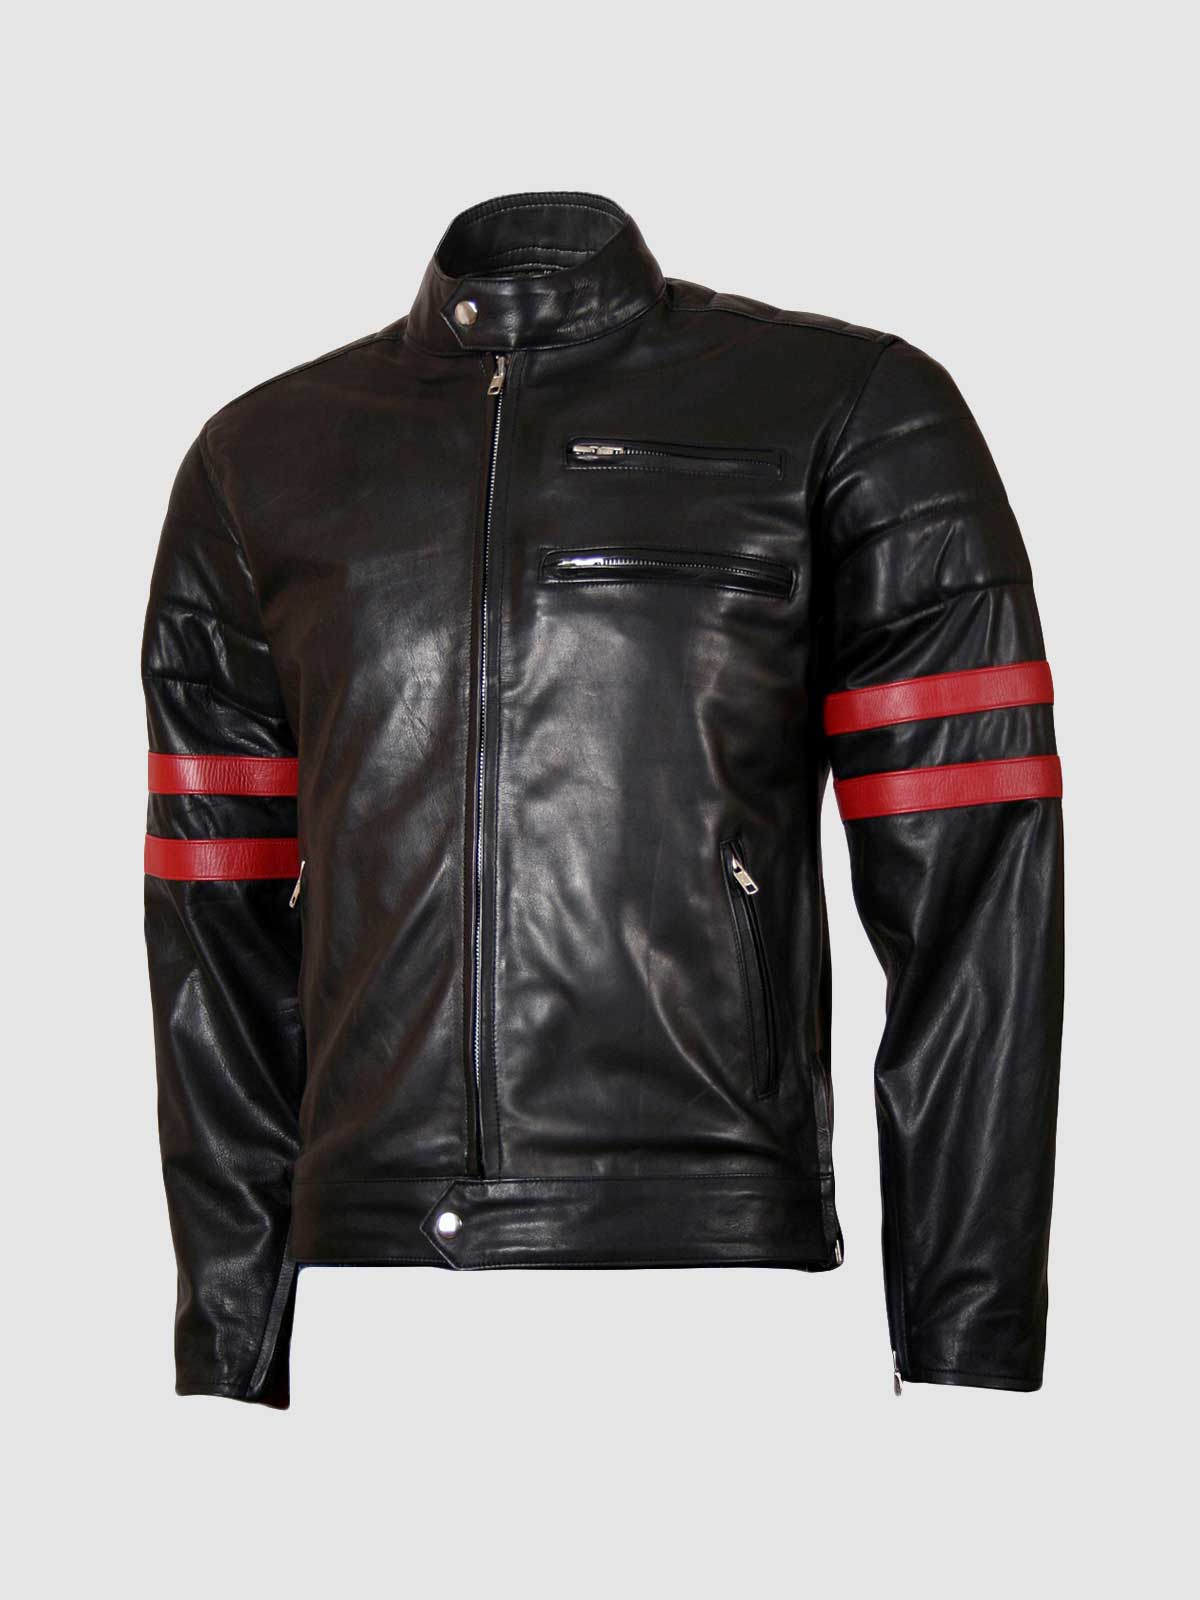 Men's Black & Red Leather Jacket | Leather Jacket Master